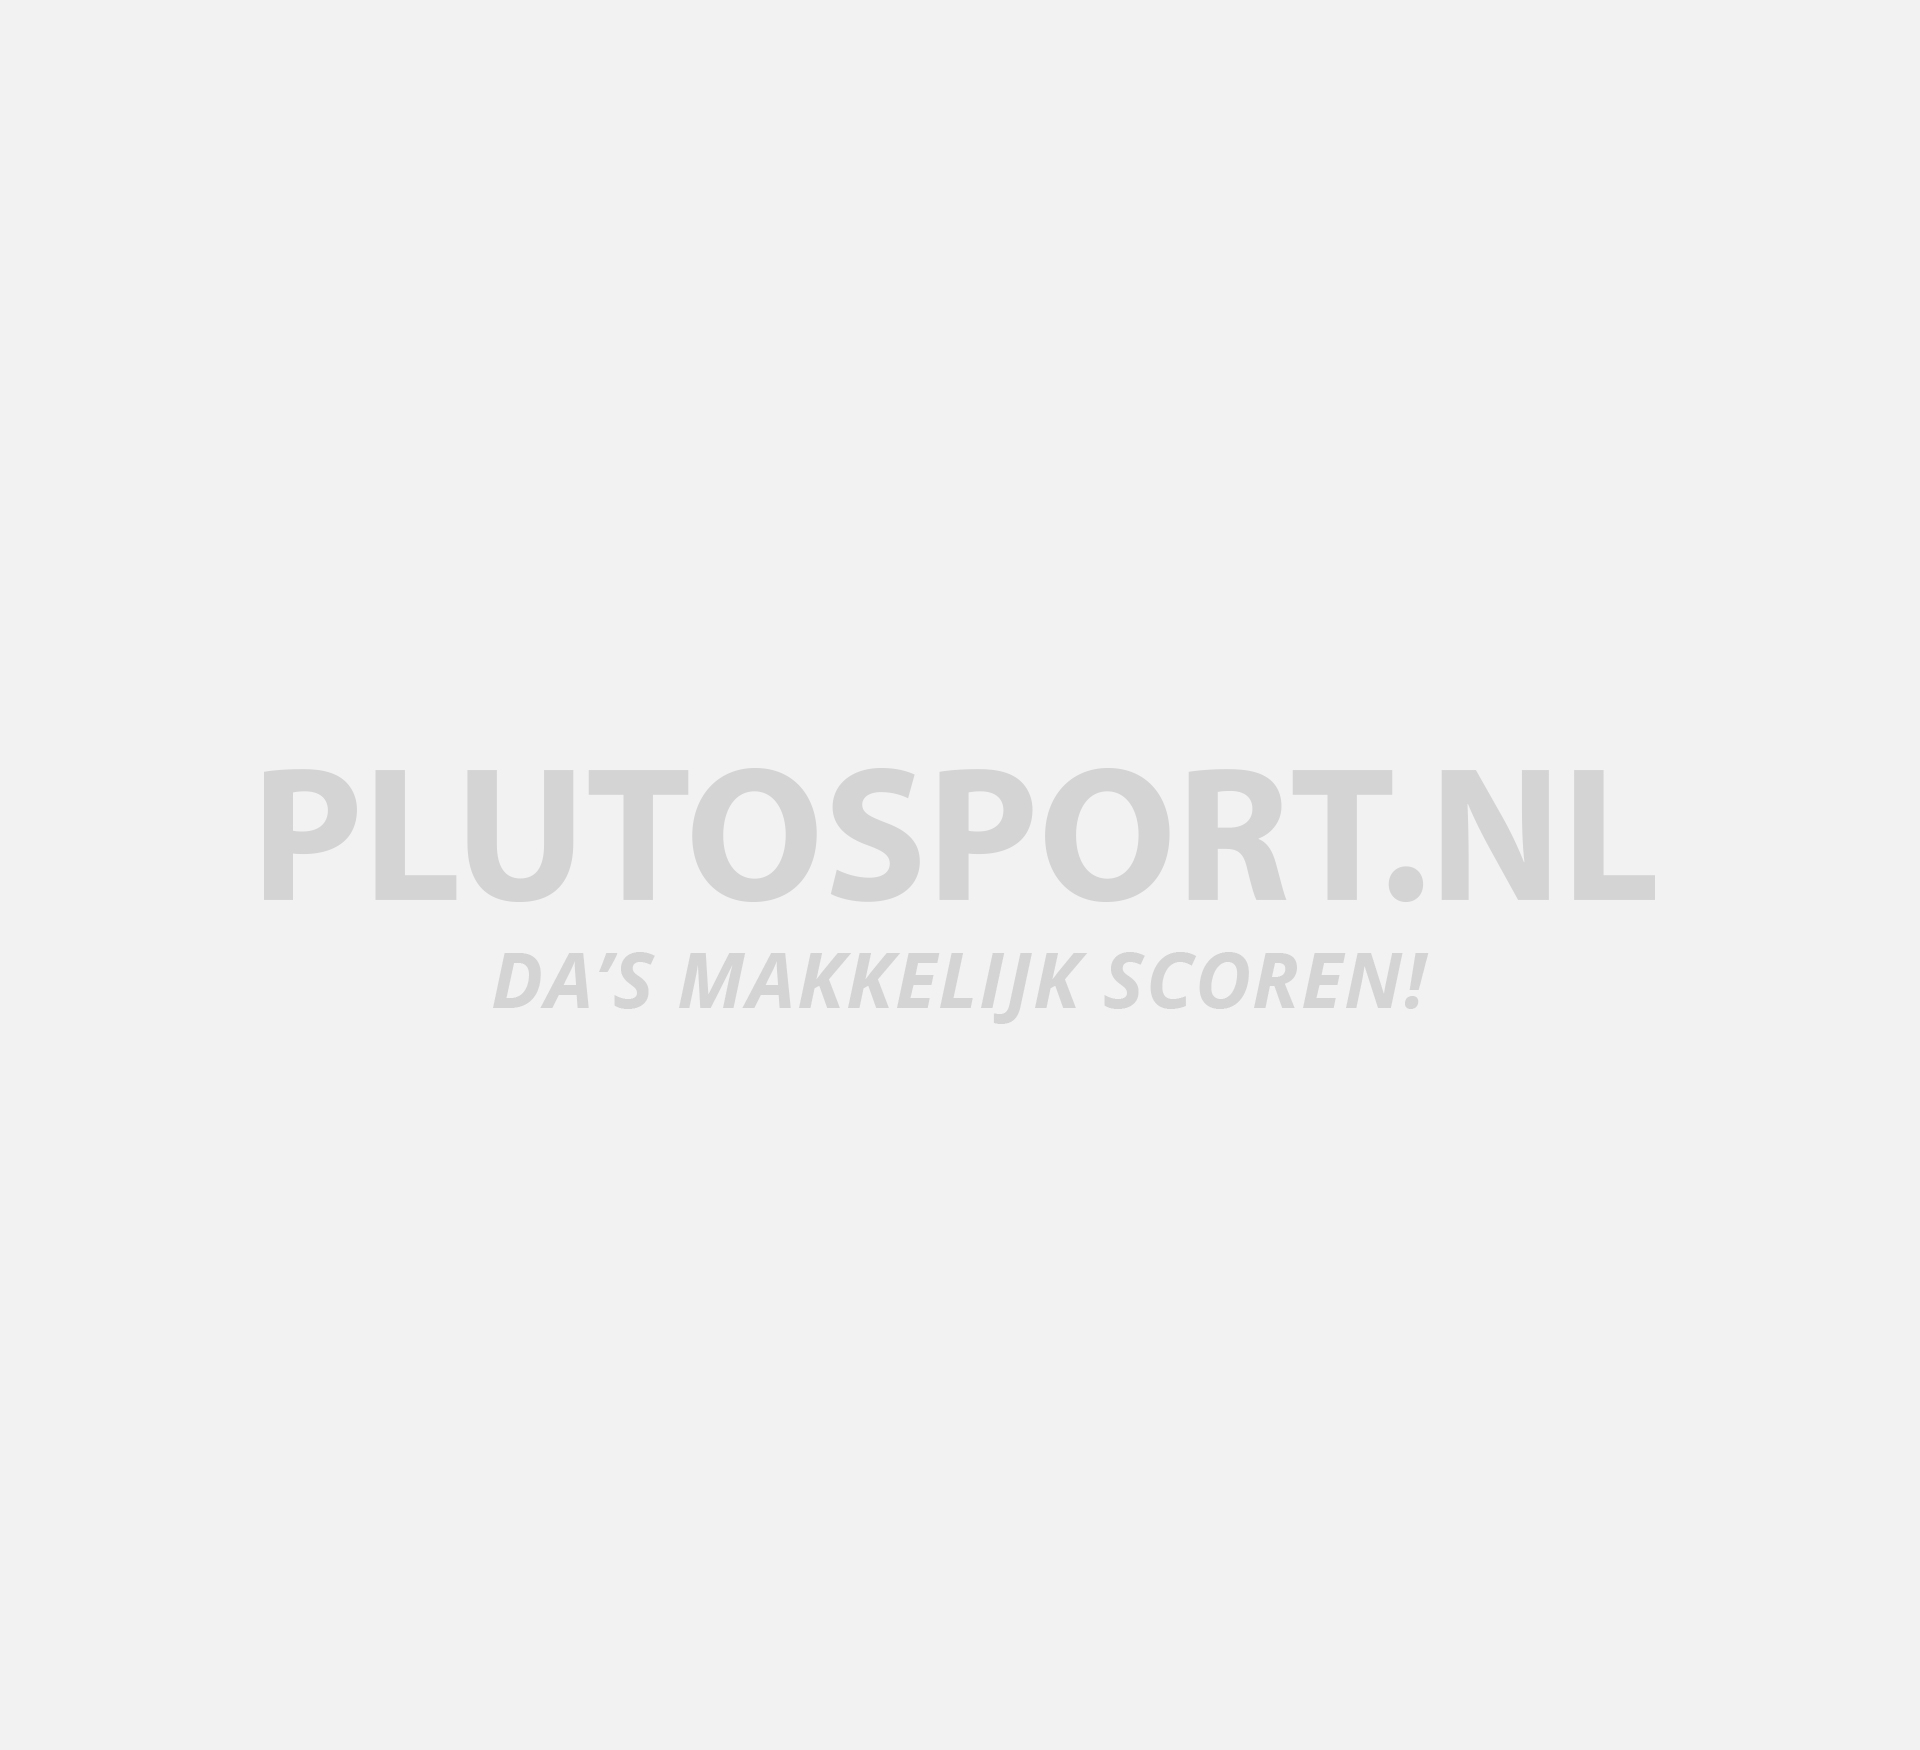 Asics Gel-Gamepoint - Gravel - Schoenen - Tennis - Sporten | Plutosport